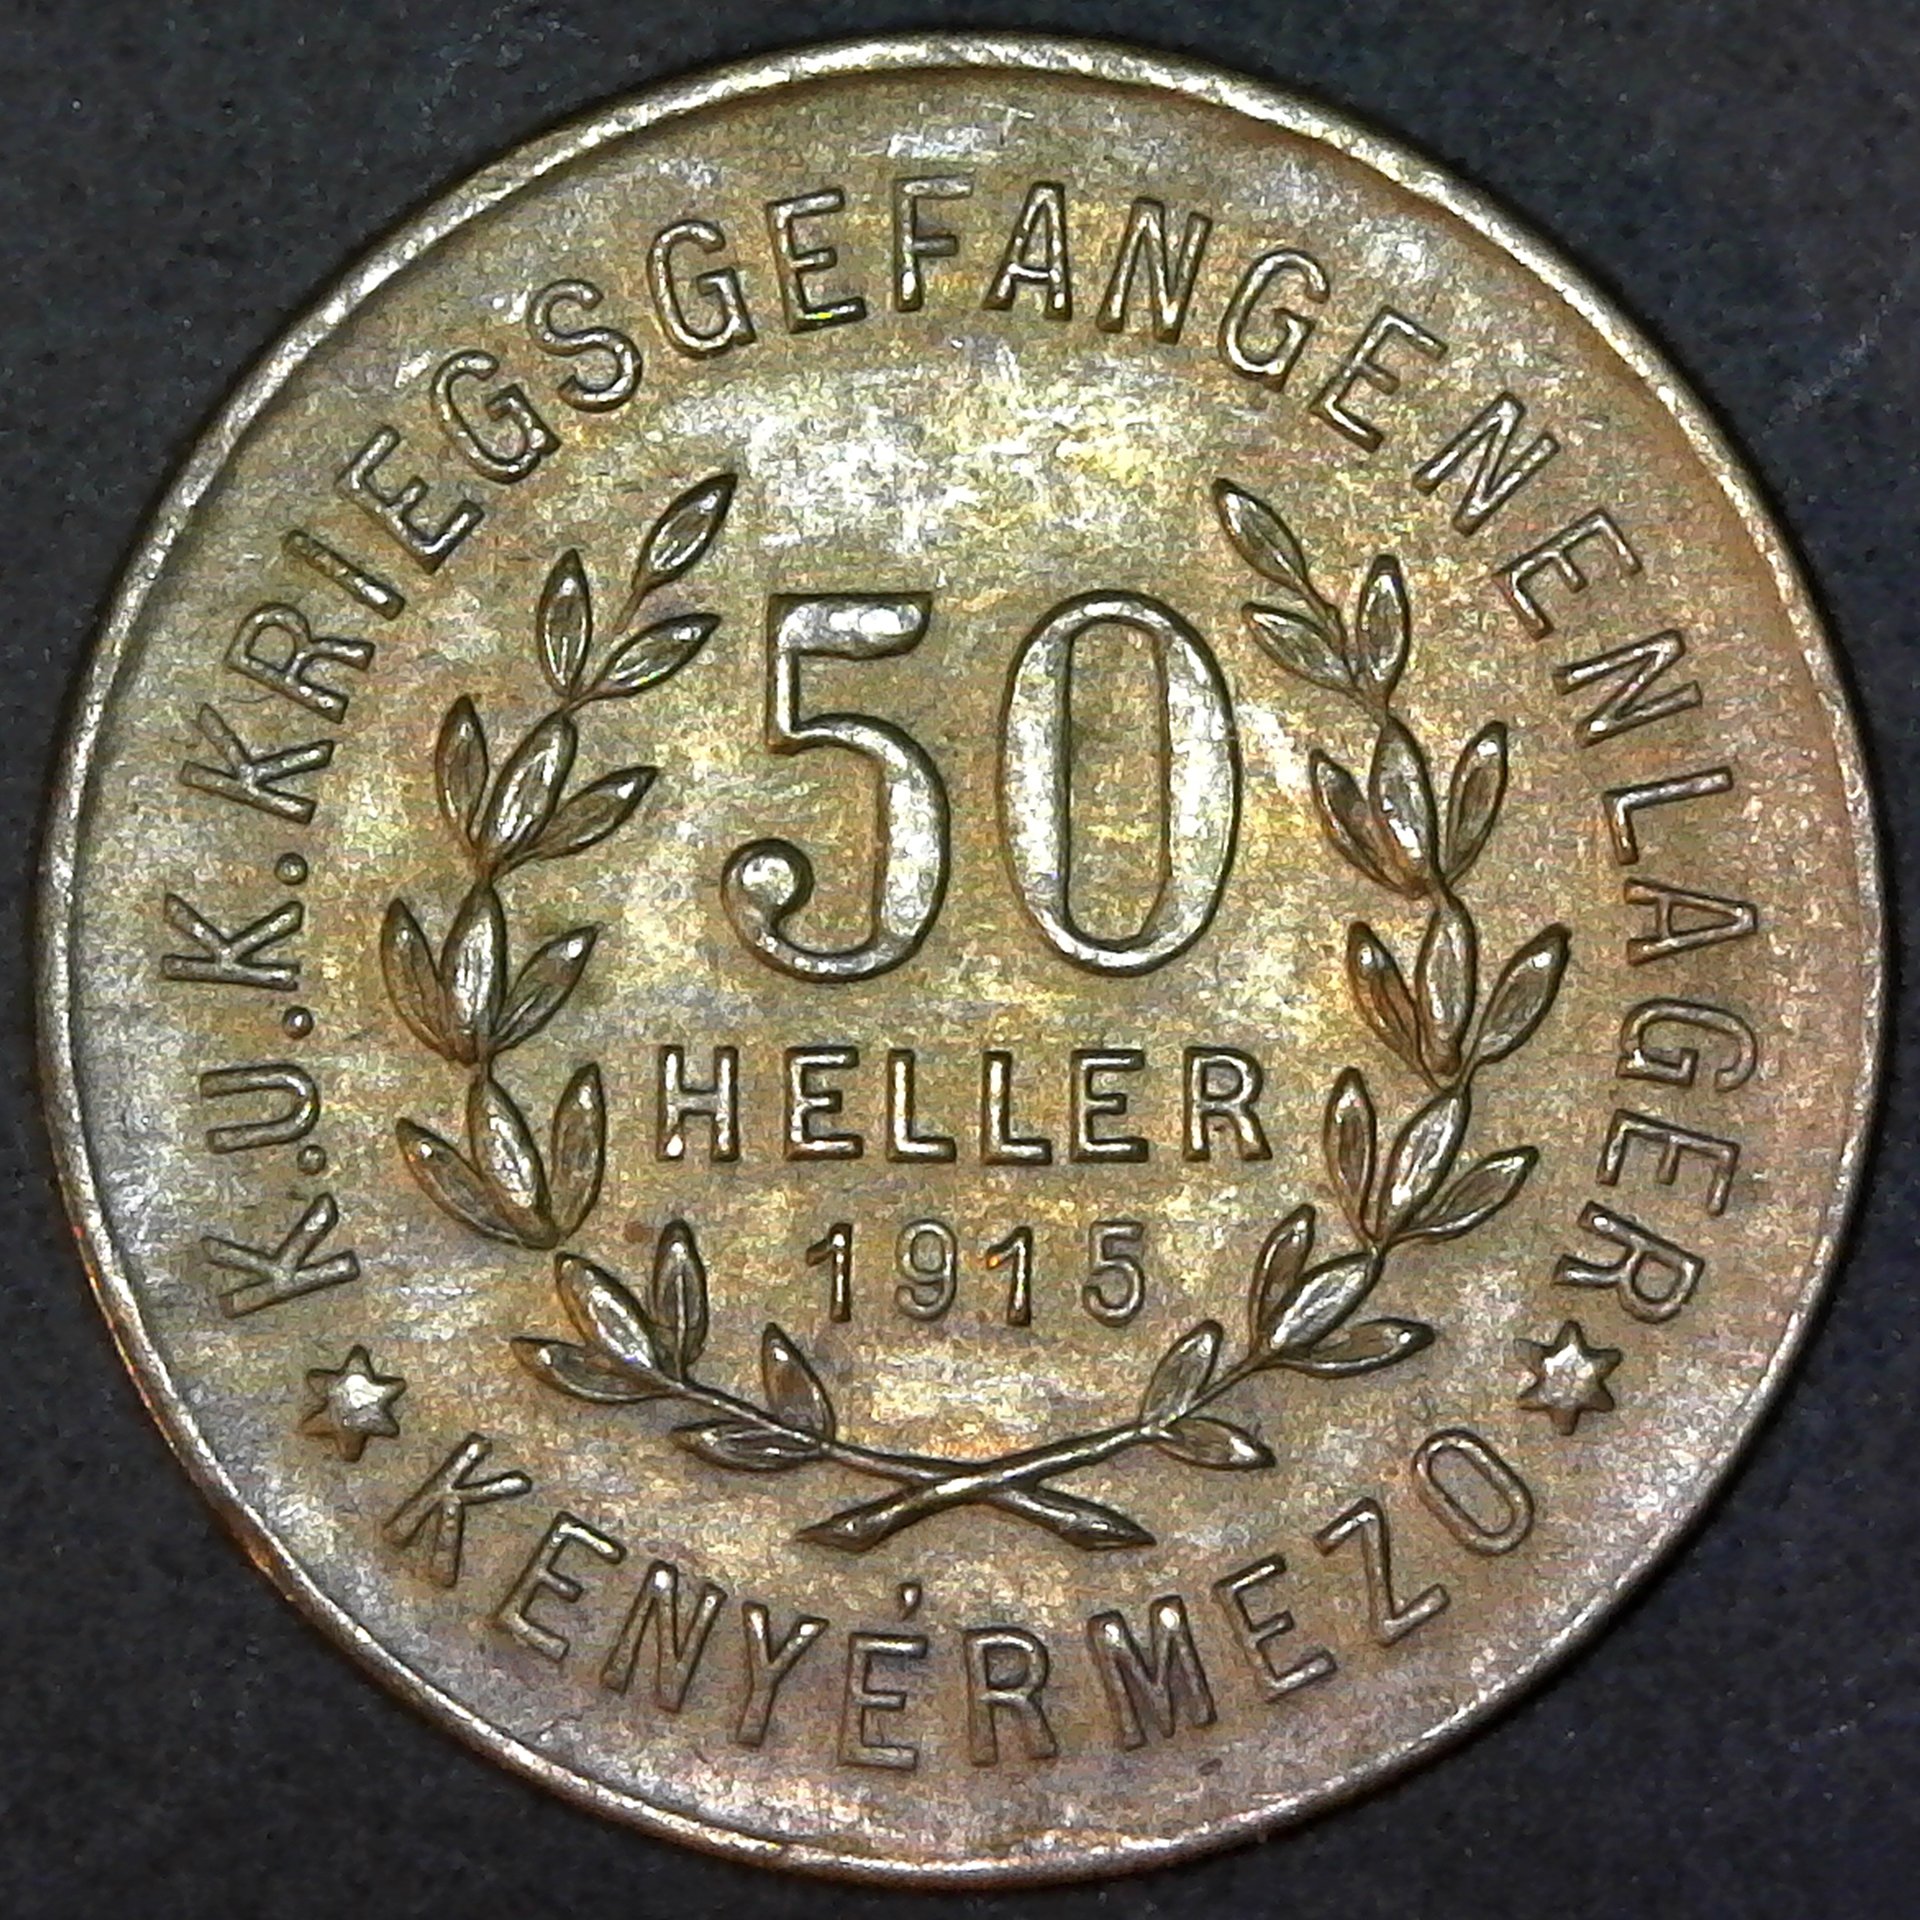 Hungary Kenyérmező 50 Filler 1915 rev.jpg